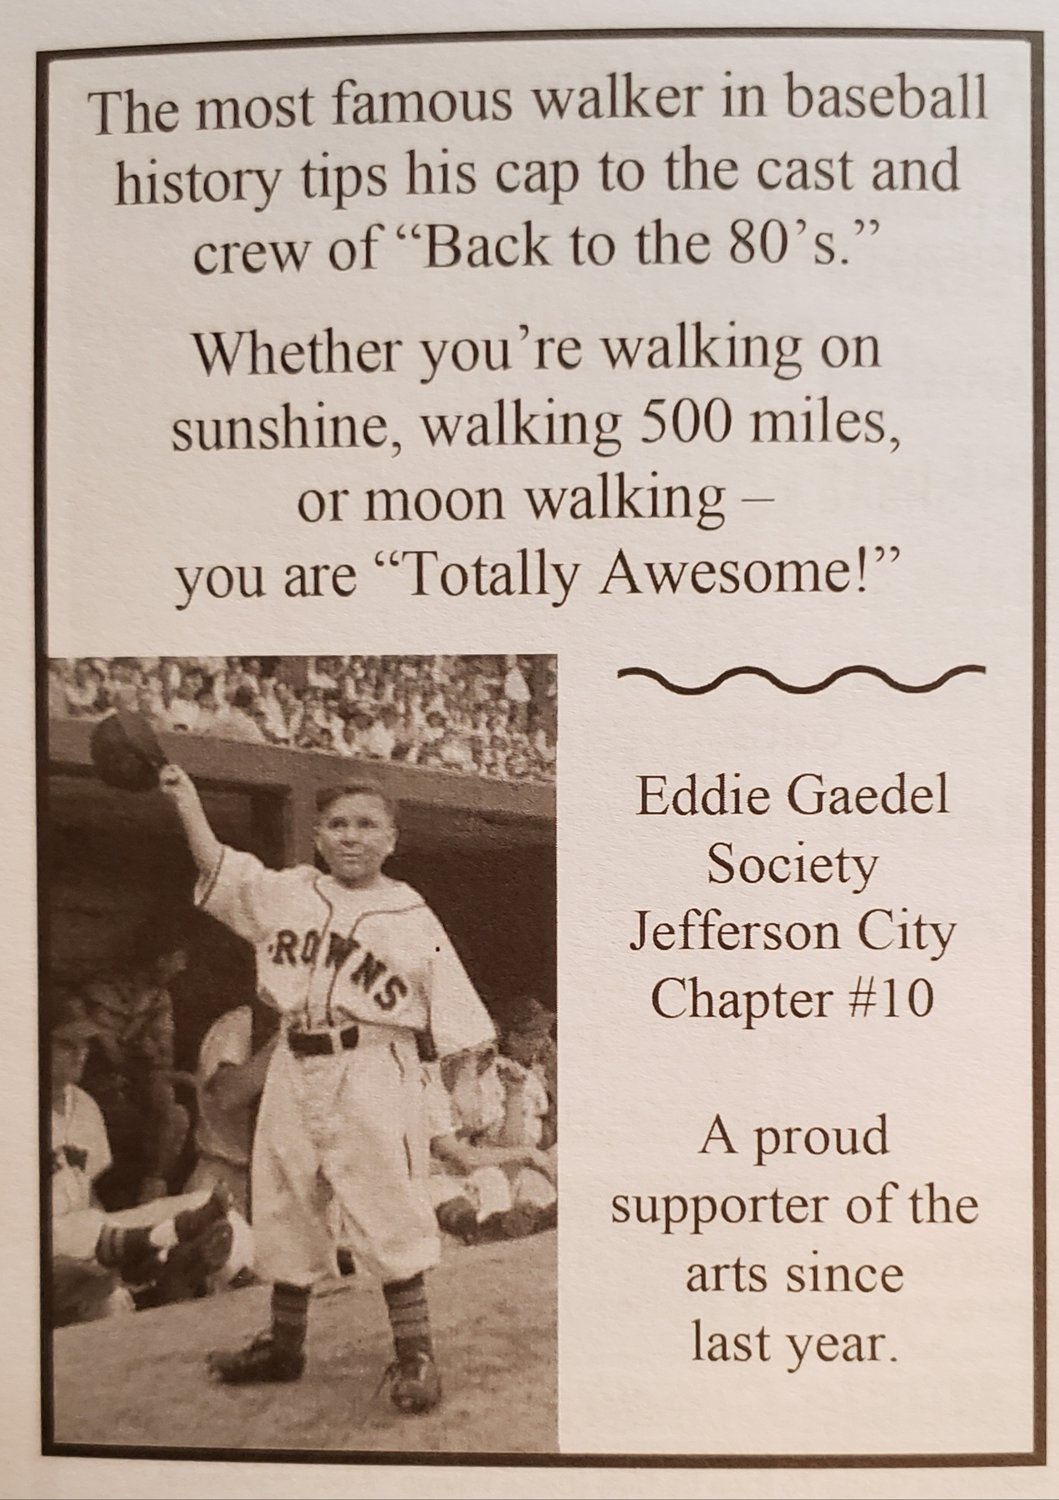 70th anniversary of Eddie Gaedel game for St. Louis Browns